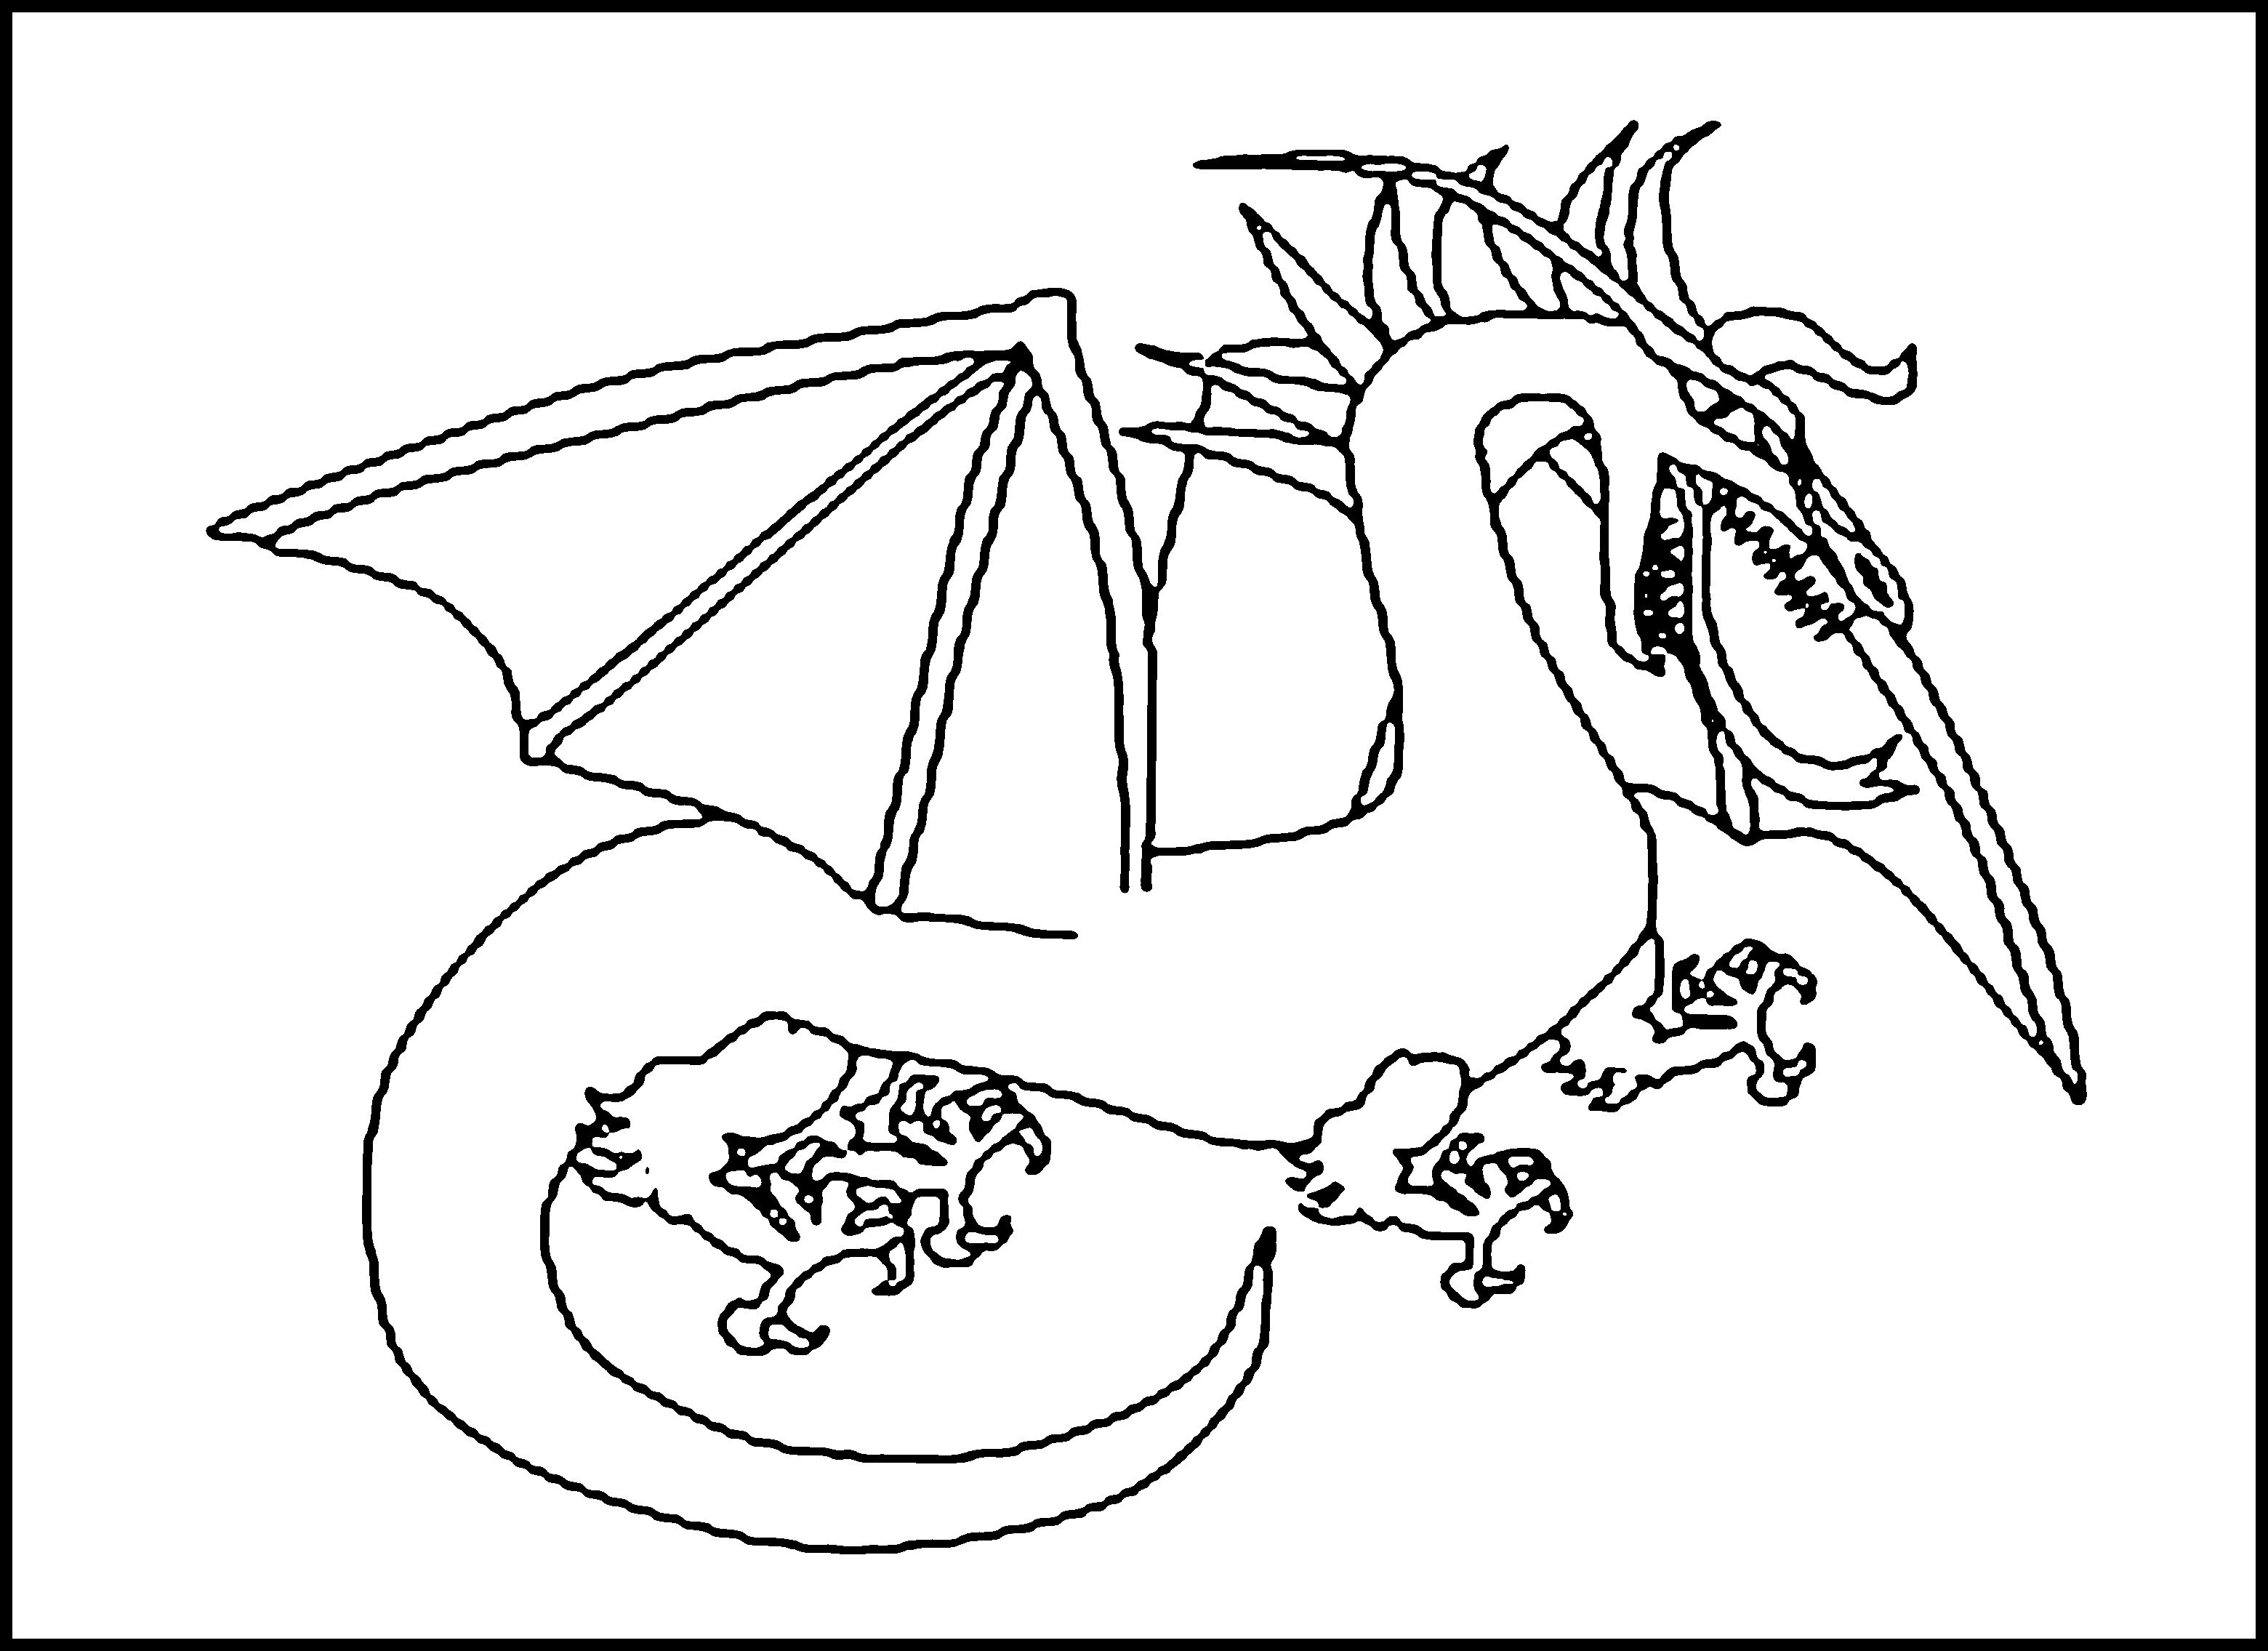 Printable Dragon Coloring Pages
 Free Printable Dragon Coloring Pages For Kids